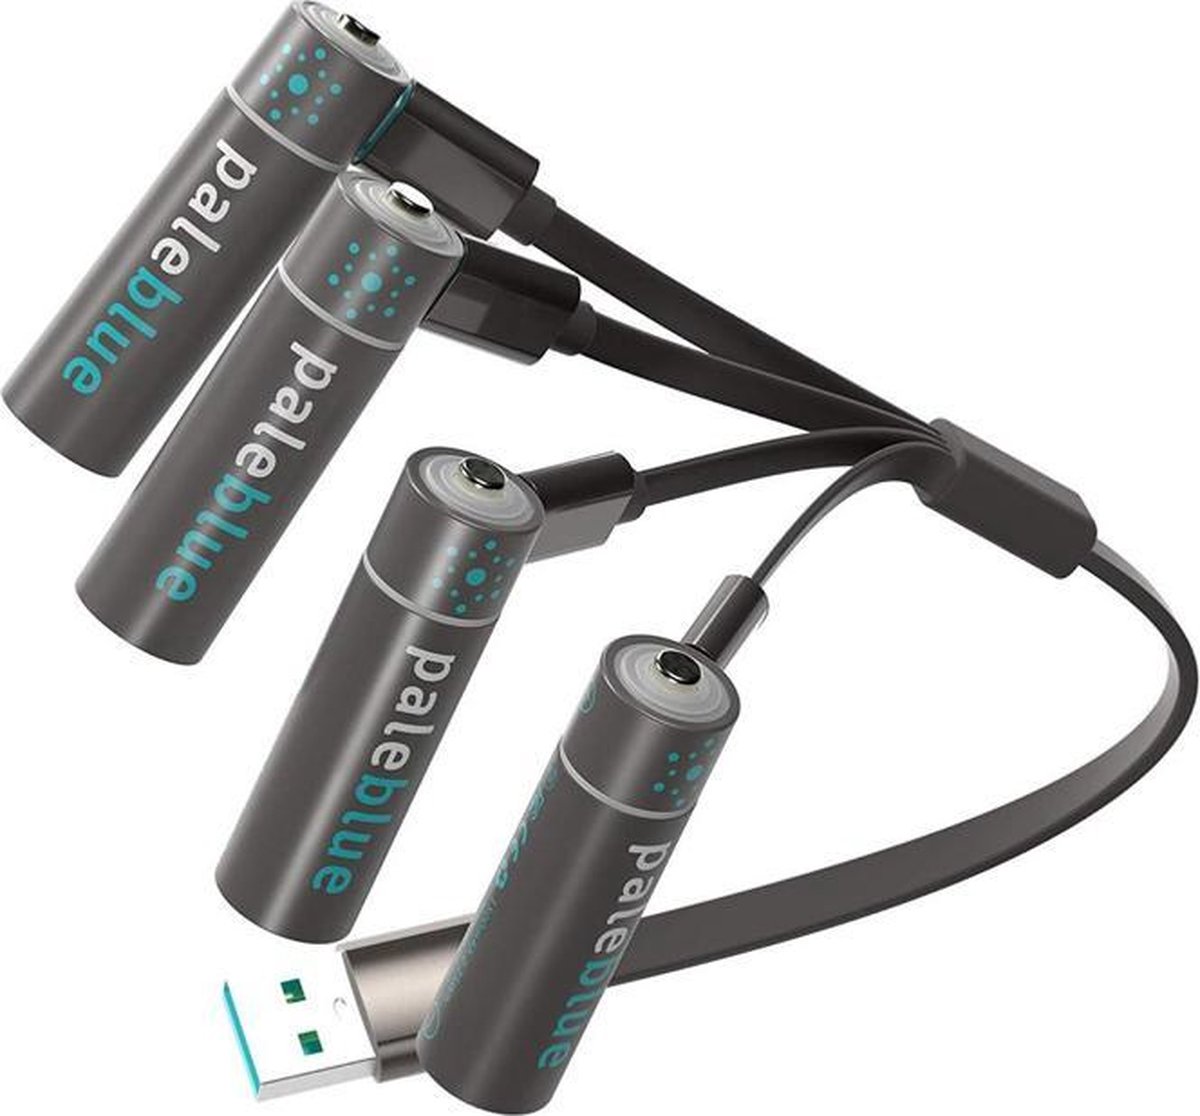 Pale Blue Earth - AA USB oplaadbare batterijen - Lithium - lichter, sneller opladen, hoger vermogen, duurzaam